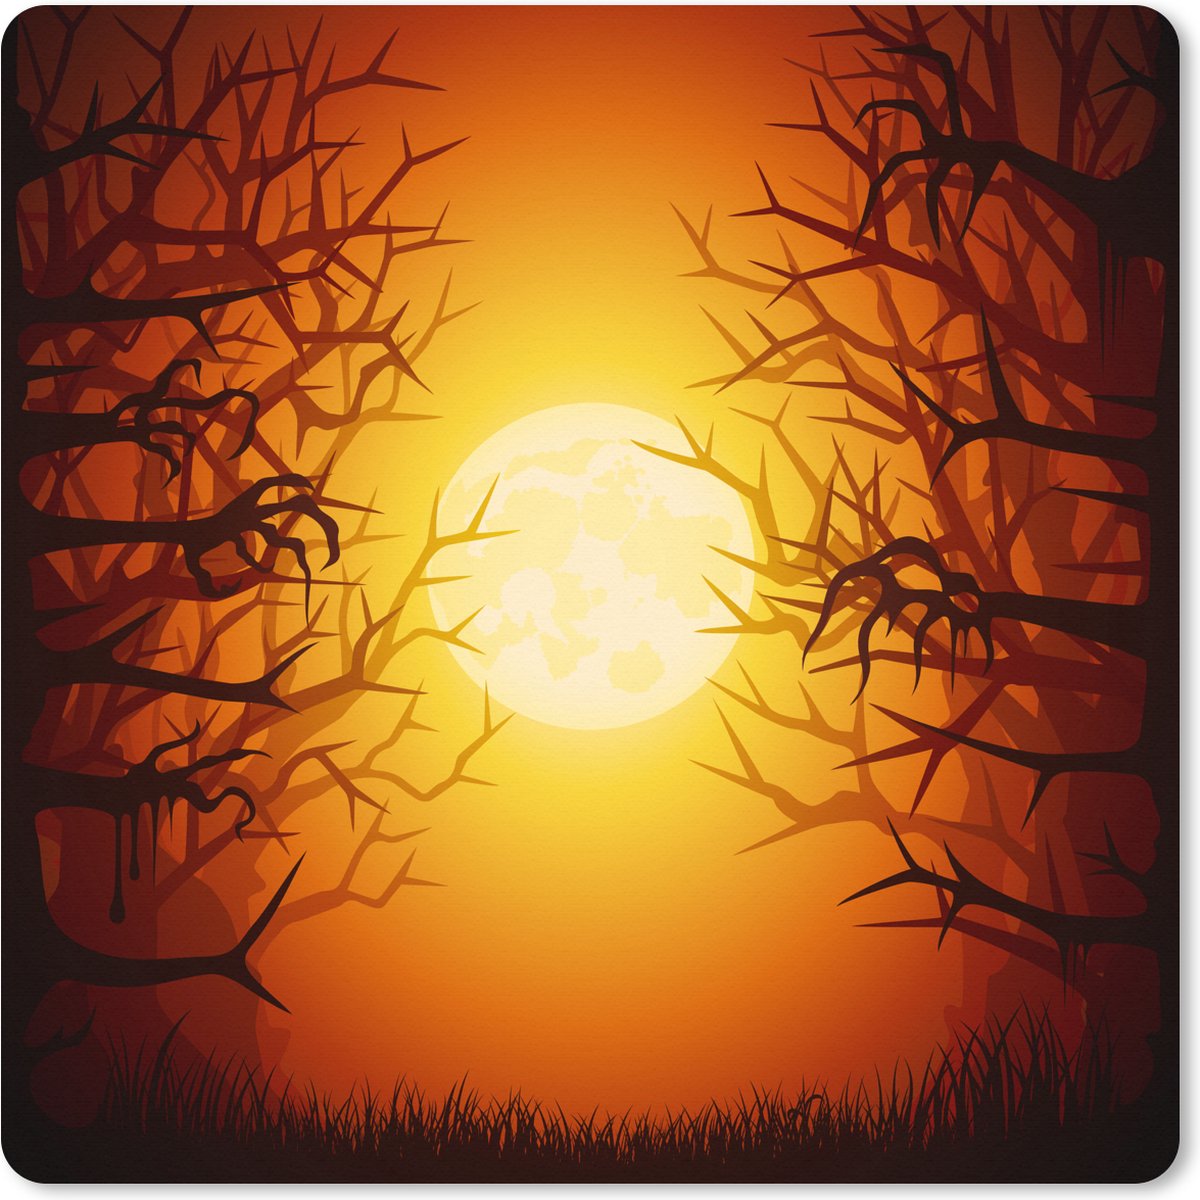 Muismat XXL - Bureau onderlegger - Bureau mat - Een geïllustreerd bos met kale vertakkingen tijdens Halloween - 40x40 cm - XXL muismat